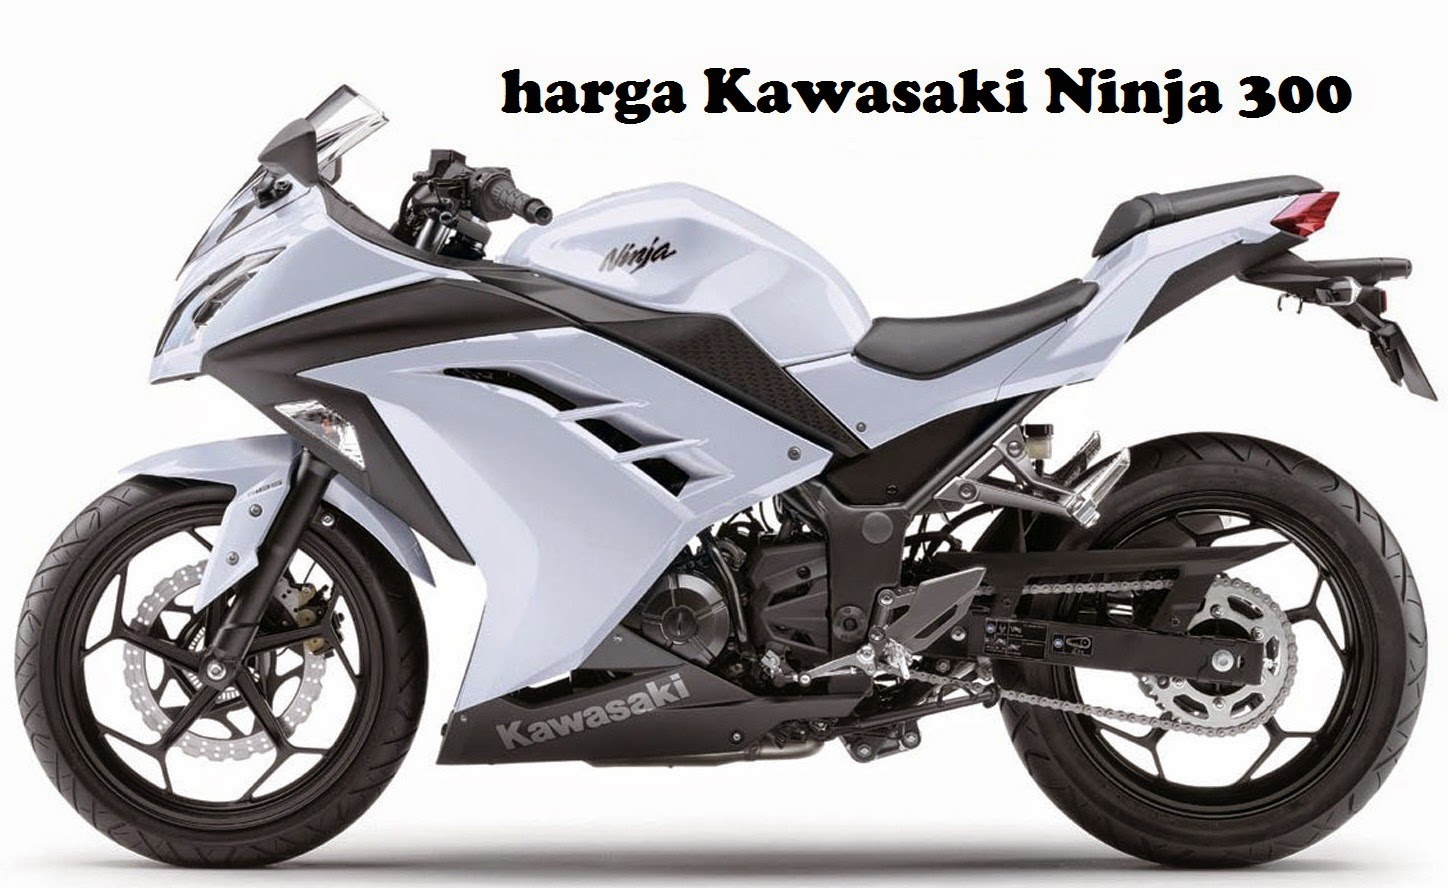 Harga Kawasaki Ninja 300 Terbaru Dan Spesifikasinya Harga Ini